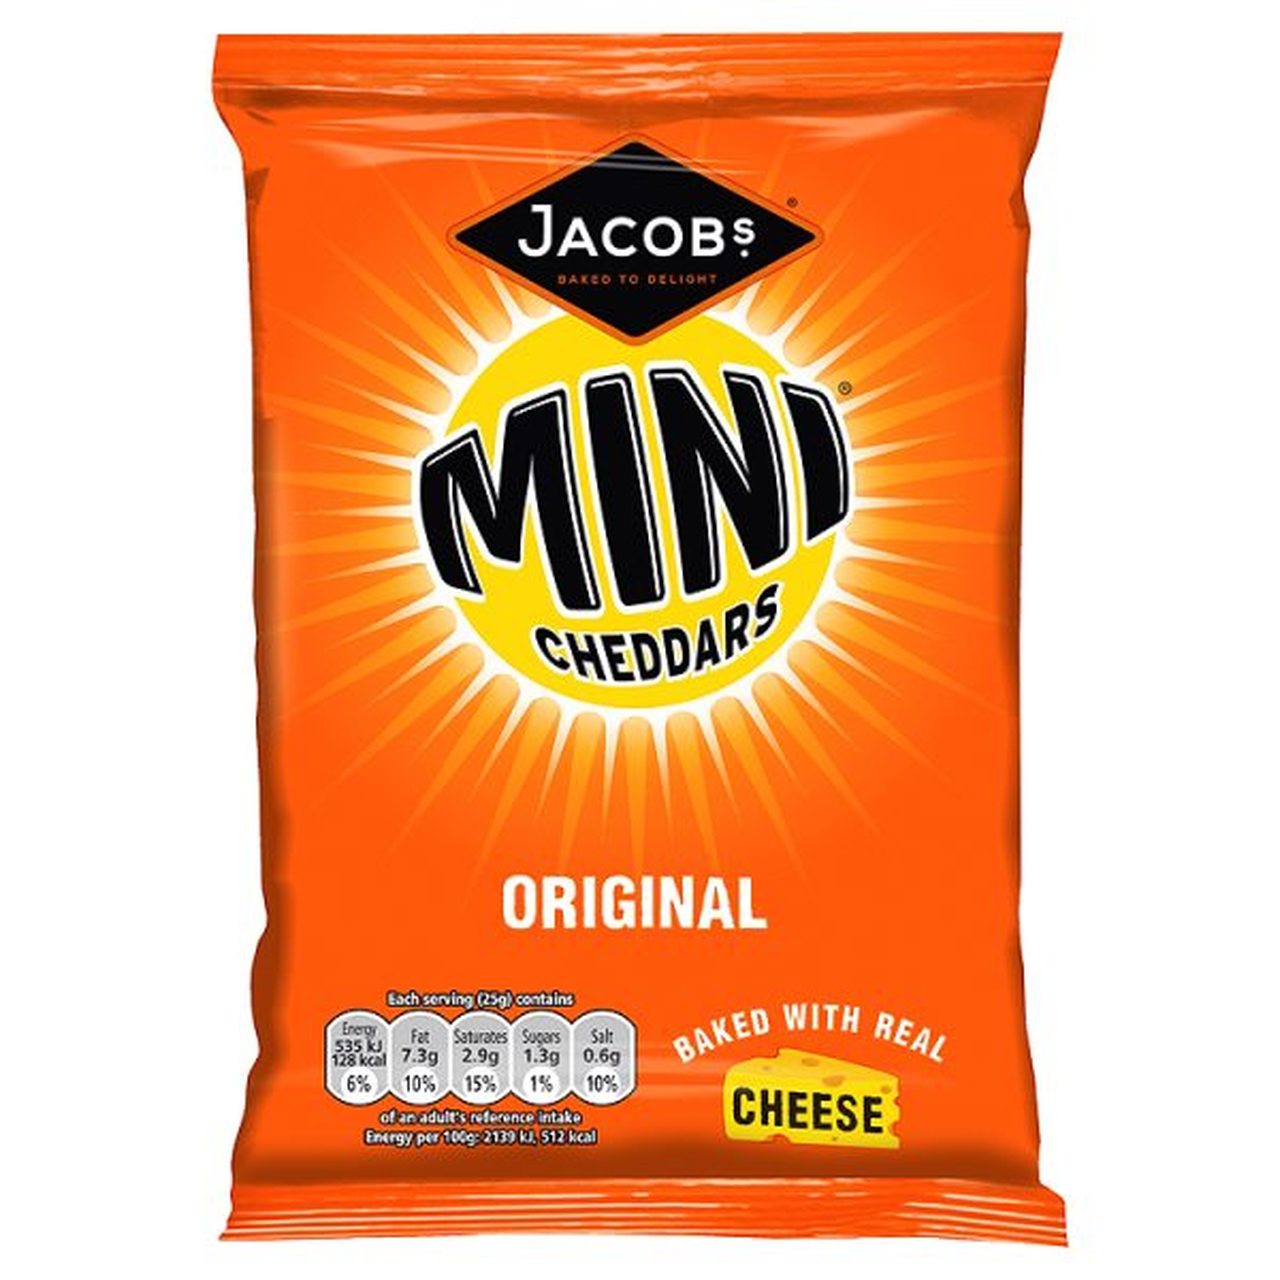 Jacob's Mini Cheddars Original 50g